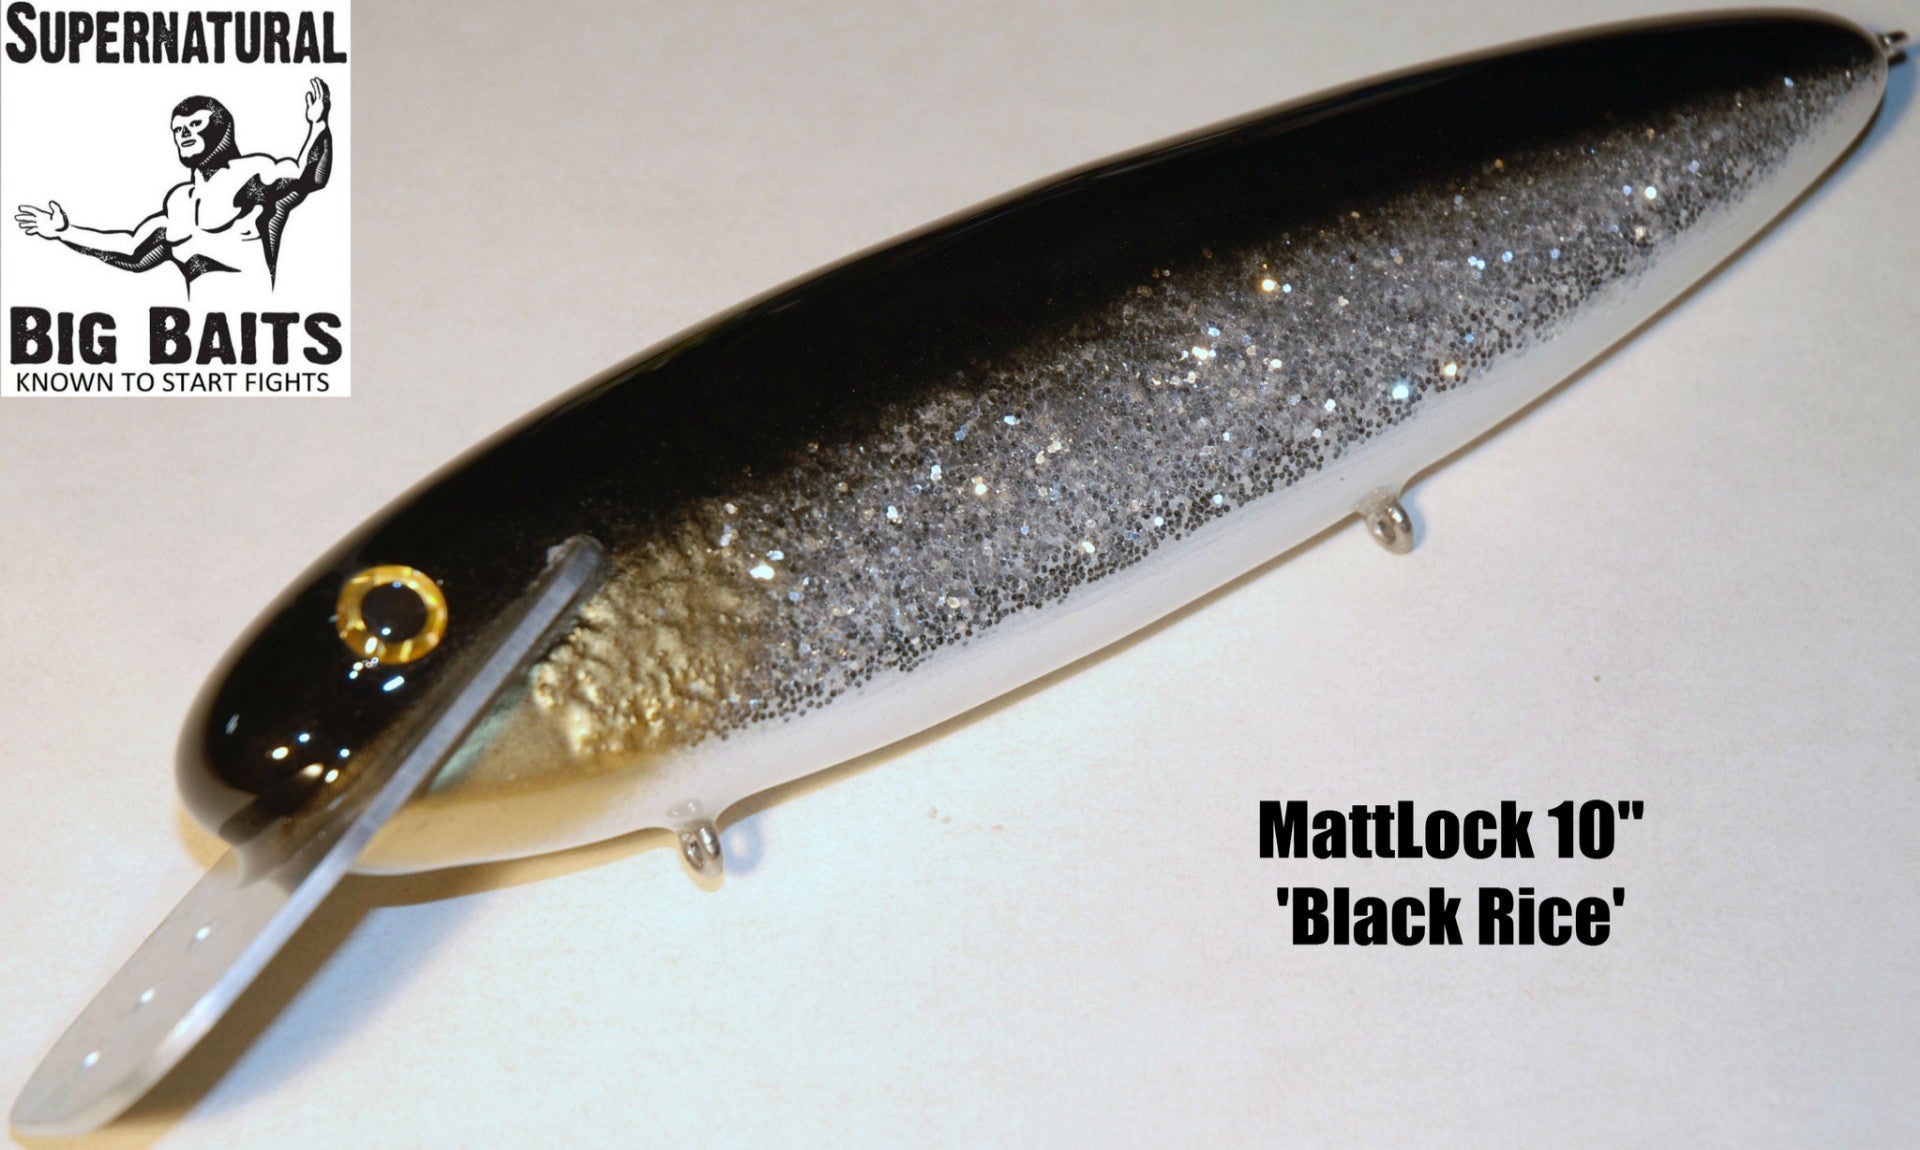 MattLock 10 Standard Black Rice – Supernatural Big Baits